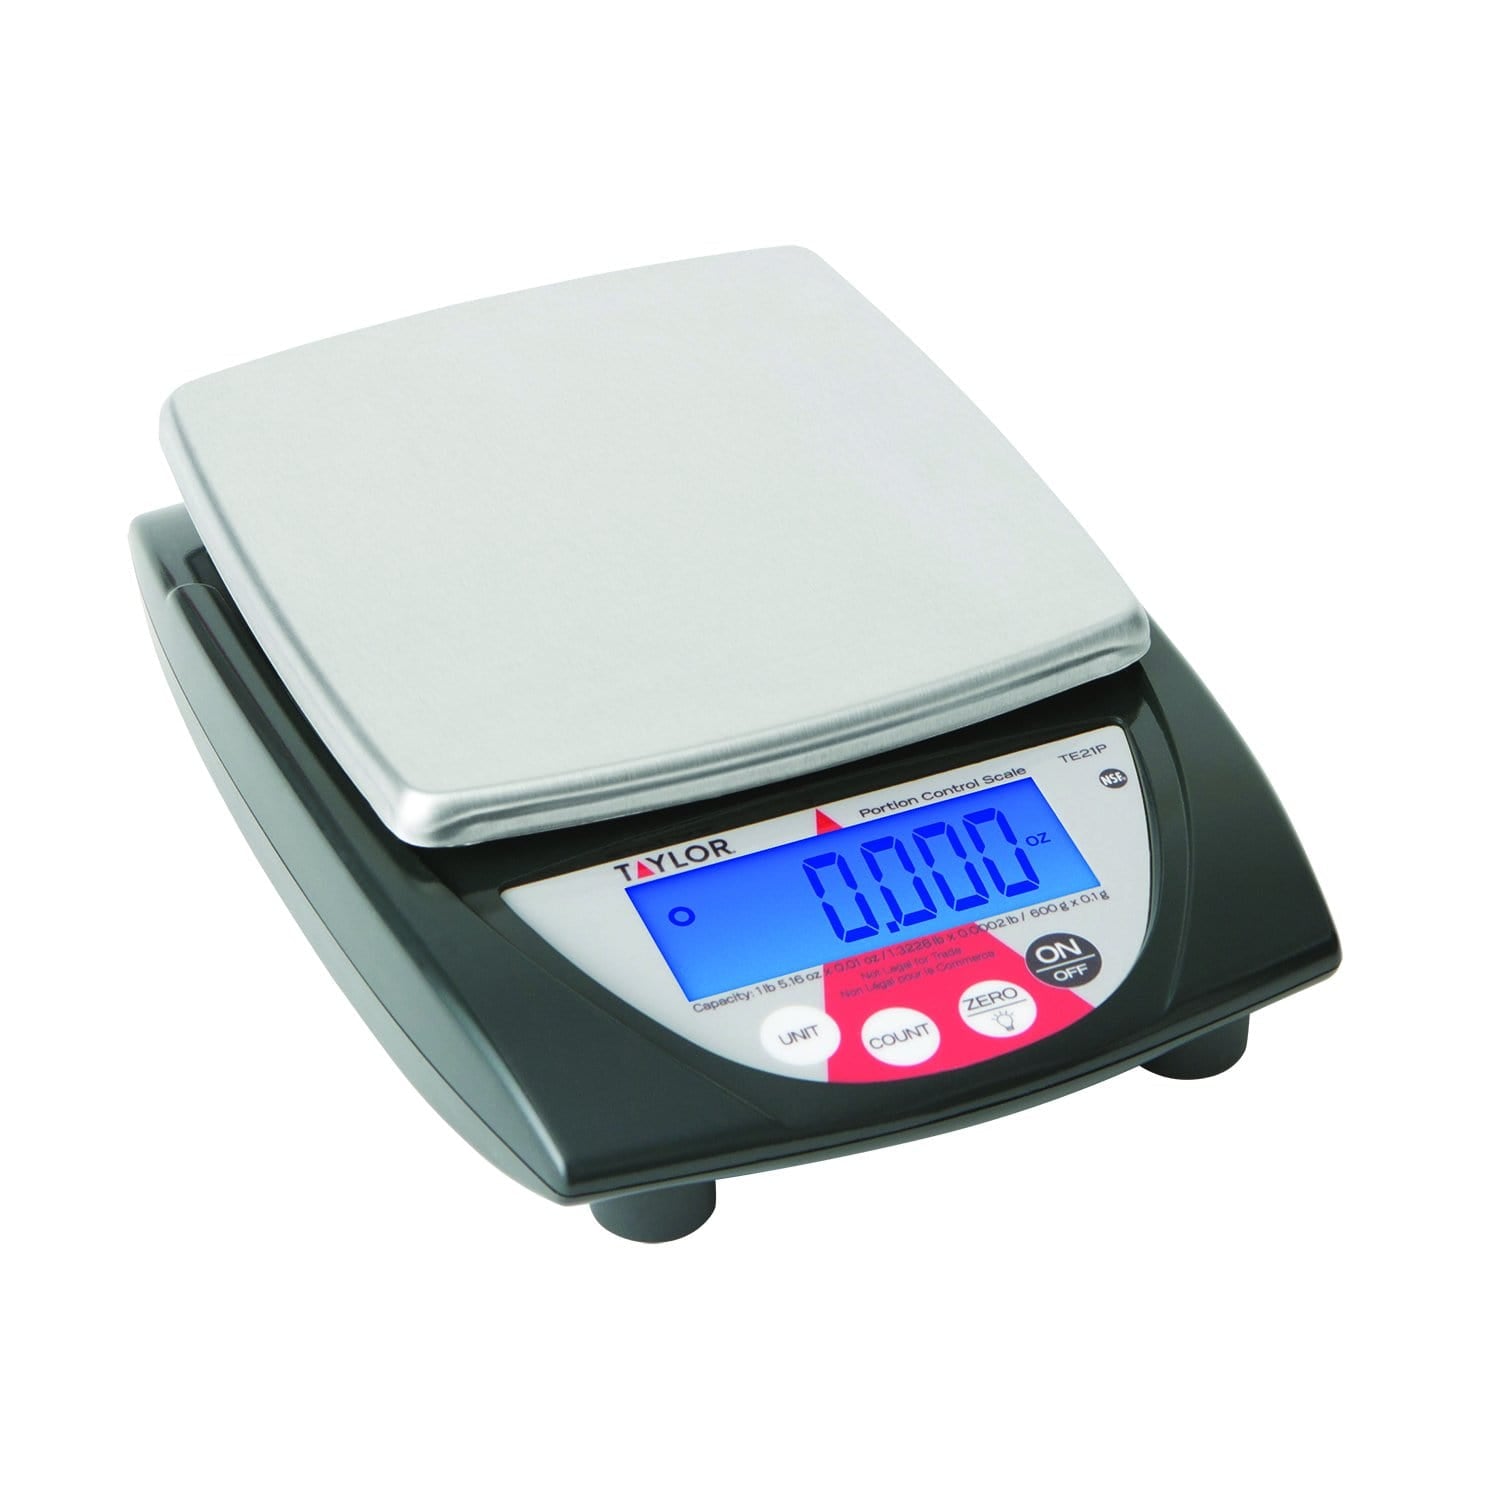 Taylor Precision Products 1020NFS Aquatronic Digital Scale, 11 lb